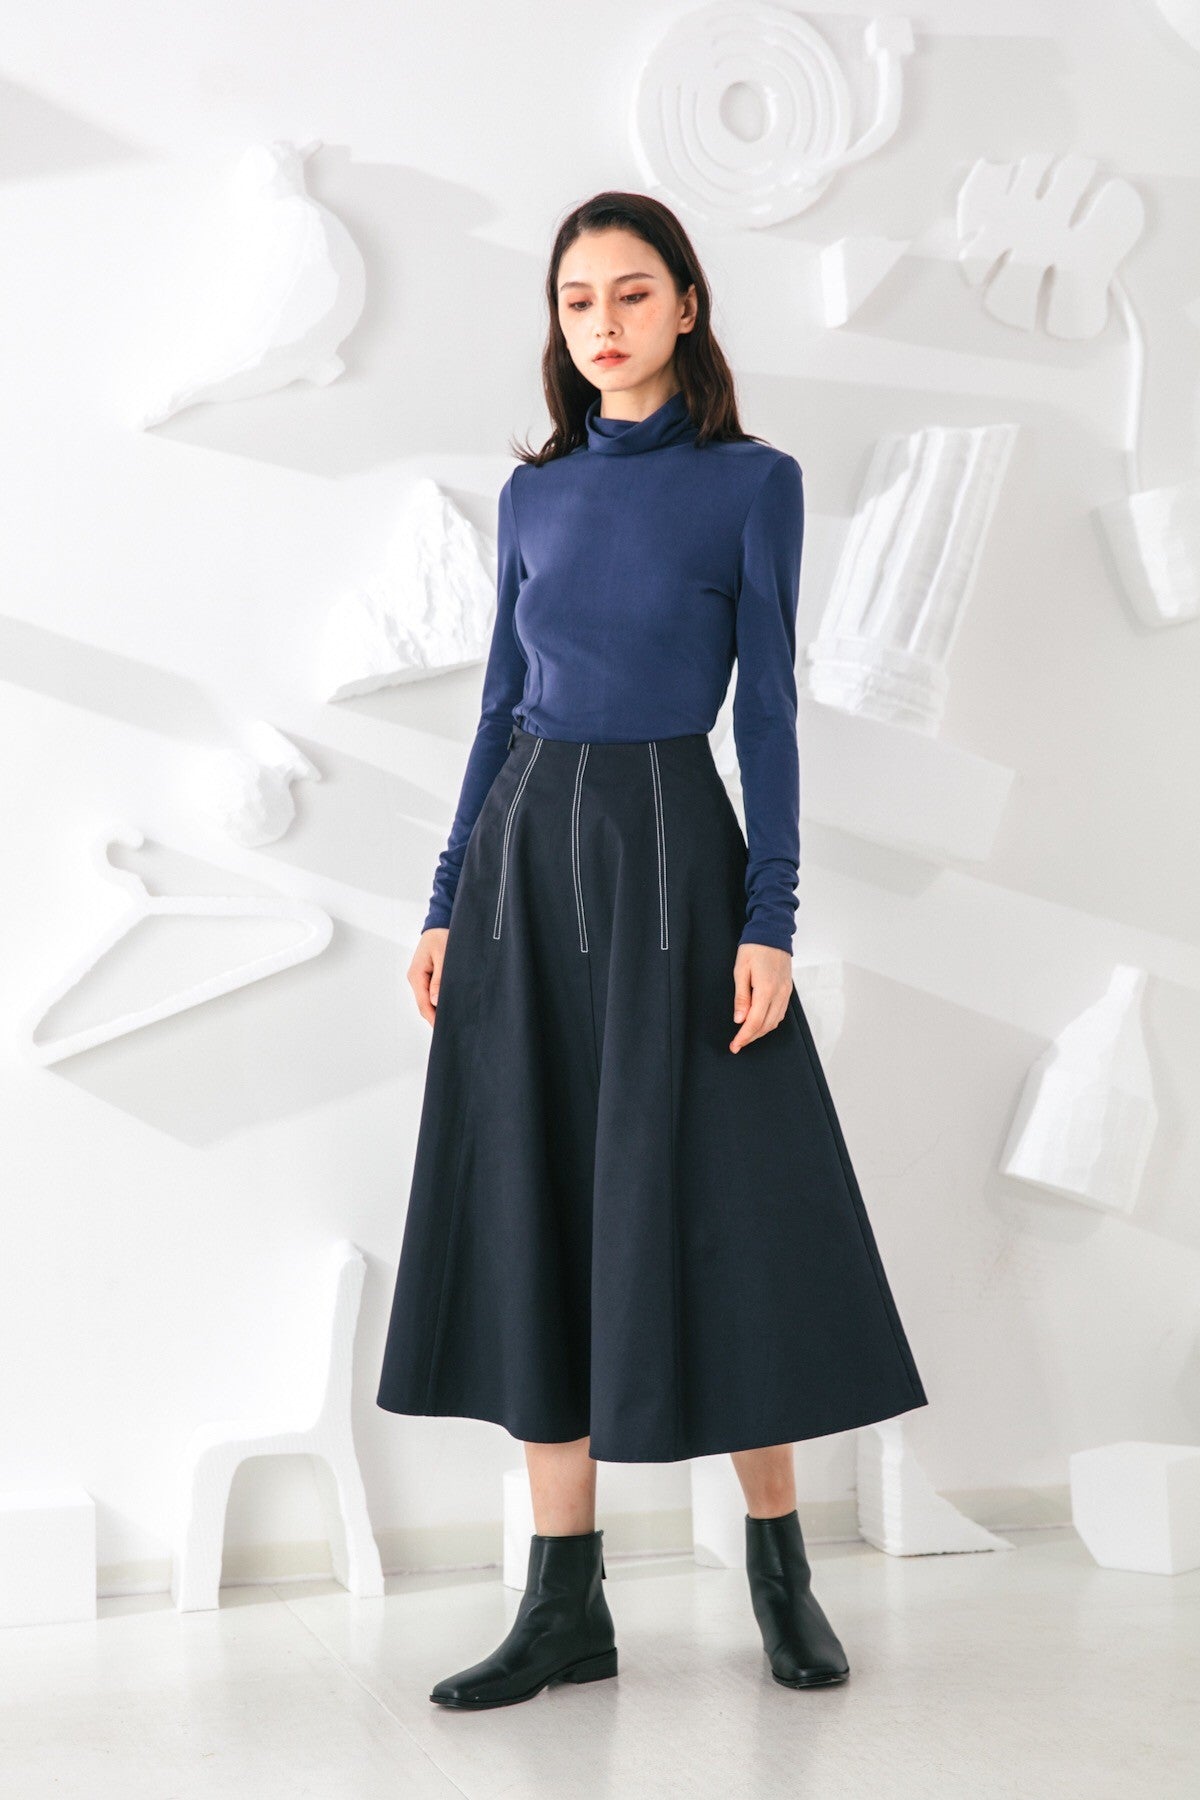 SKYE San Francisco SF shop ethical modern minimalist quality women clothing fashion Jeanne Midi Skirt blue